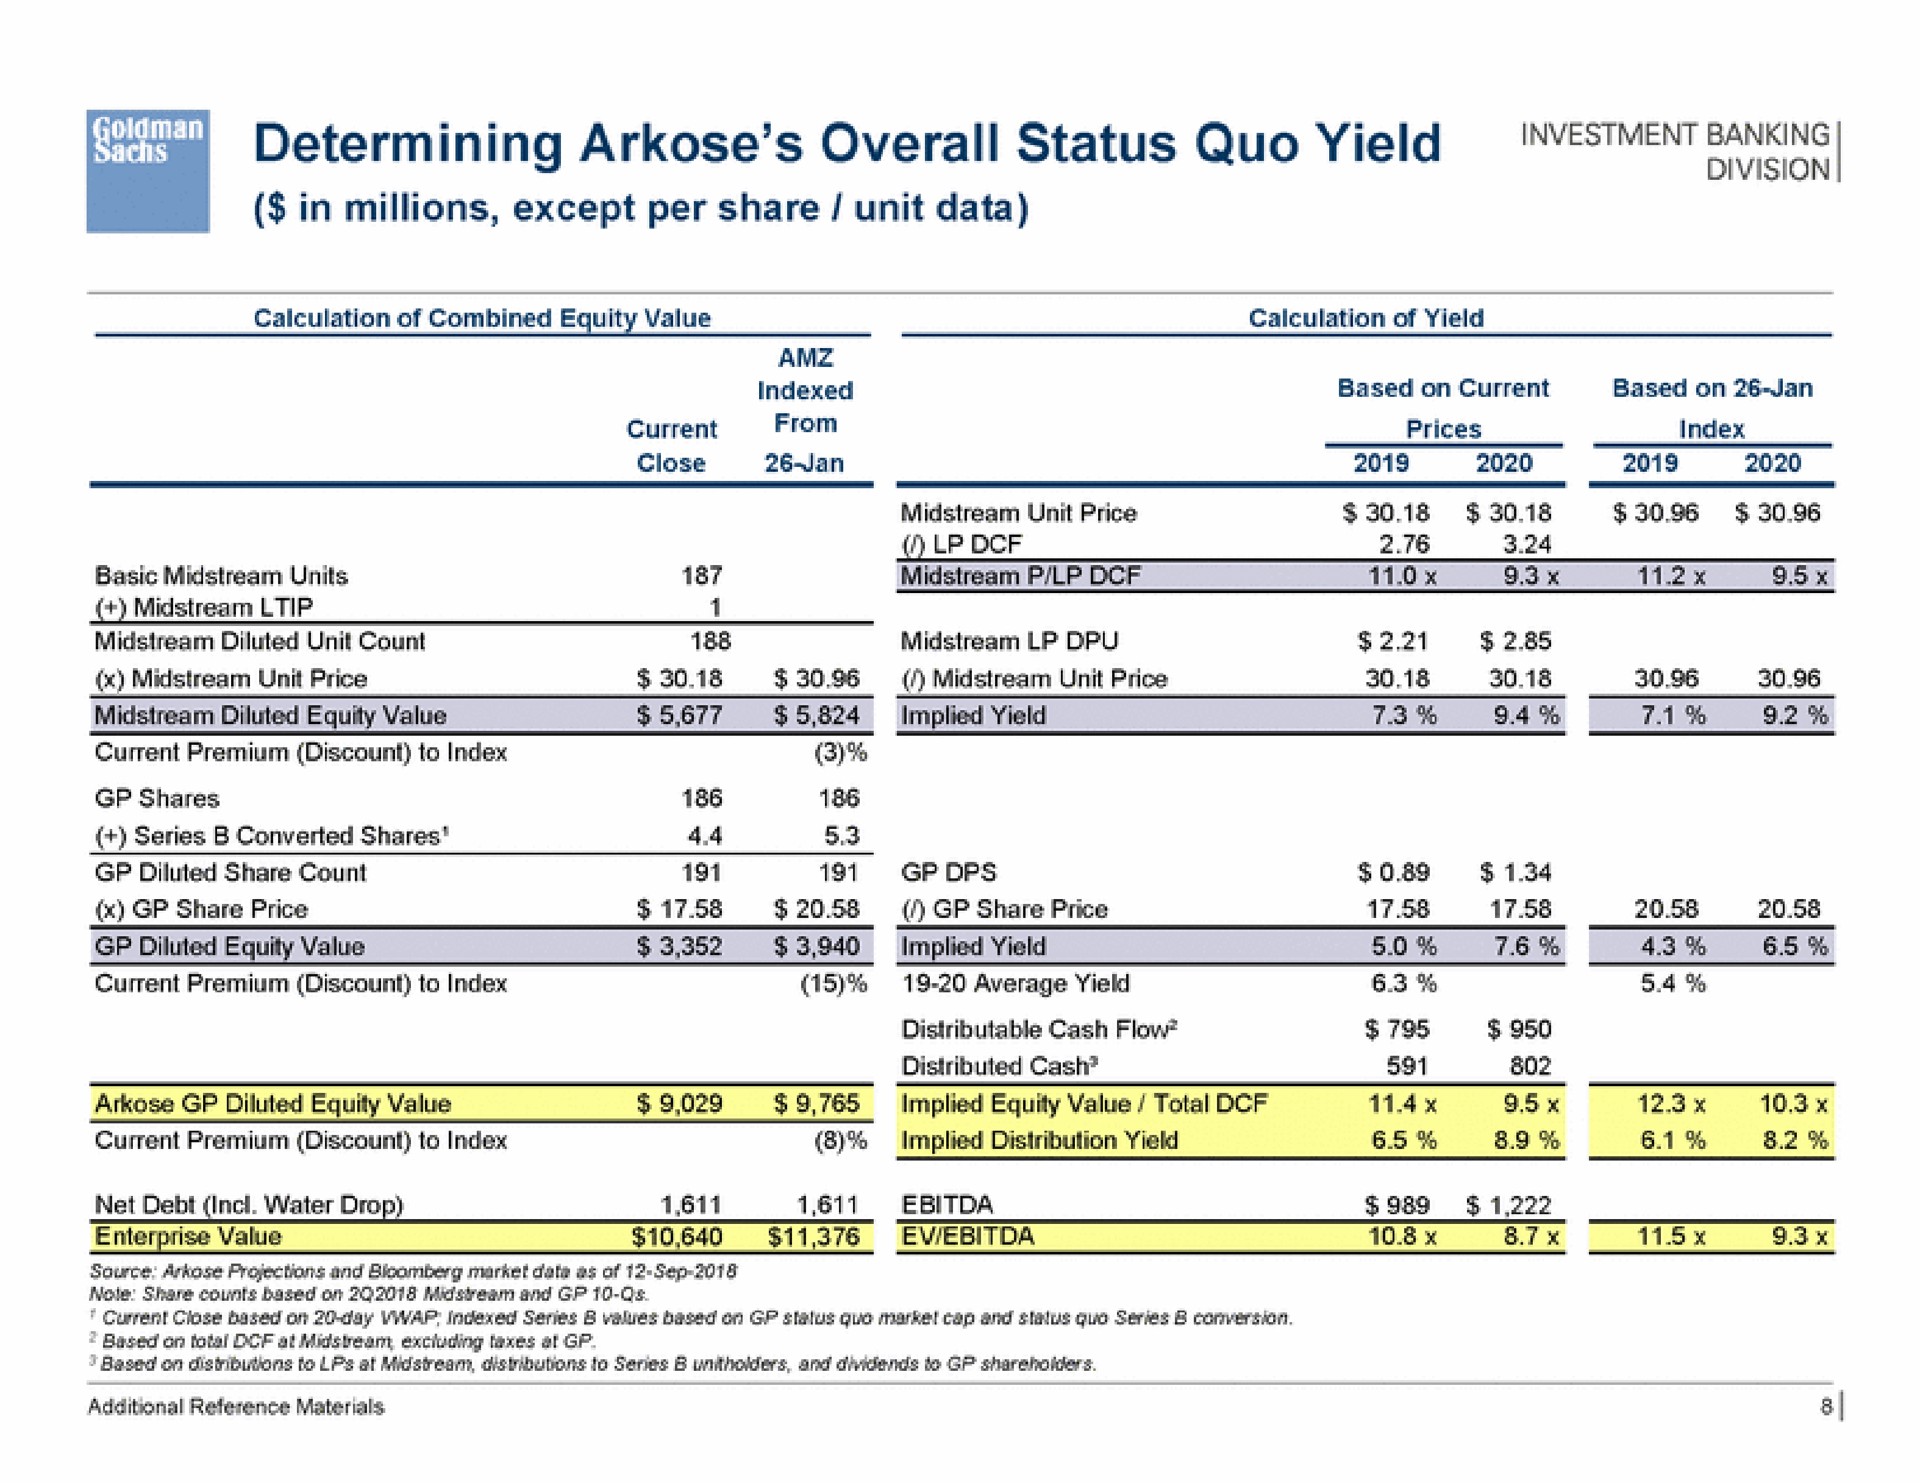 sac determining arkose overall status quo yield | Goldman Sachs